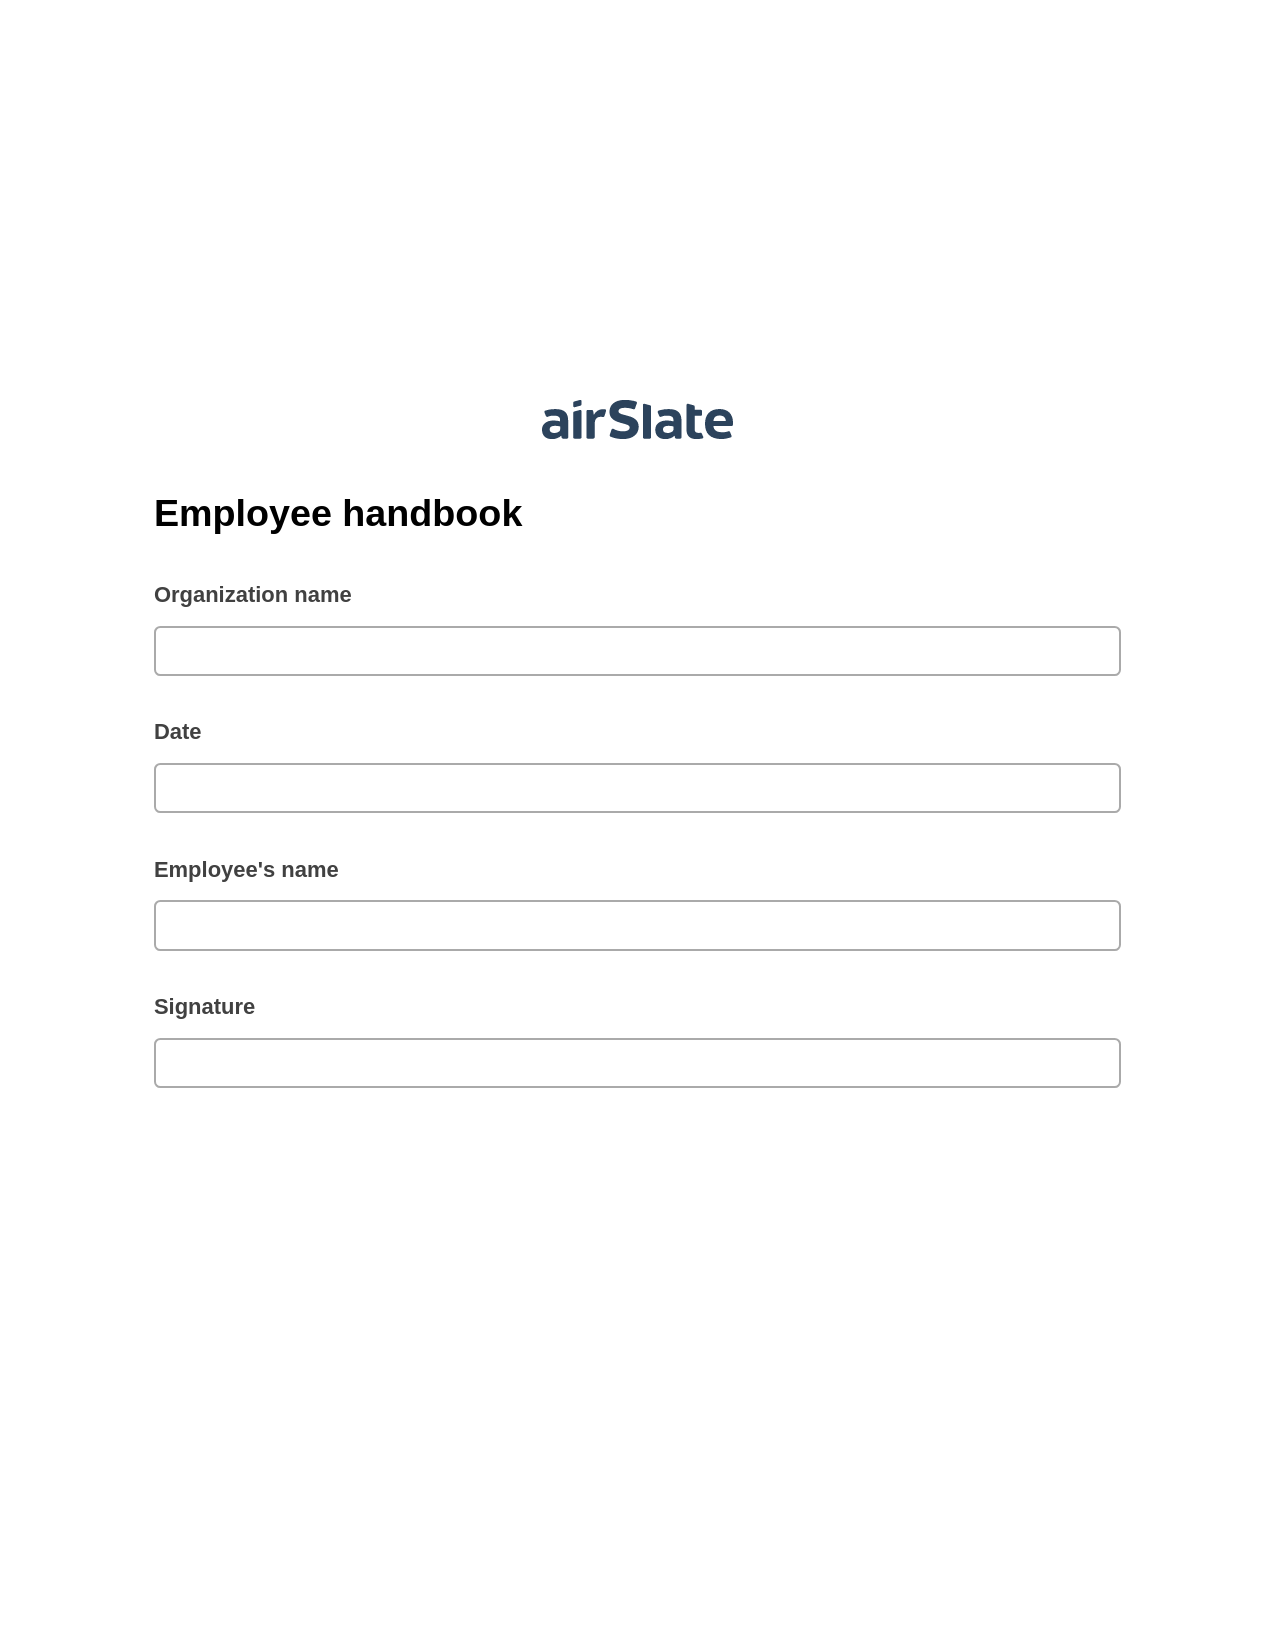 Multirole Employee handbook Pre-fill Slate from MS Dynamics 365 Records Bot, Document Hide Bot, OneDrive Bot